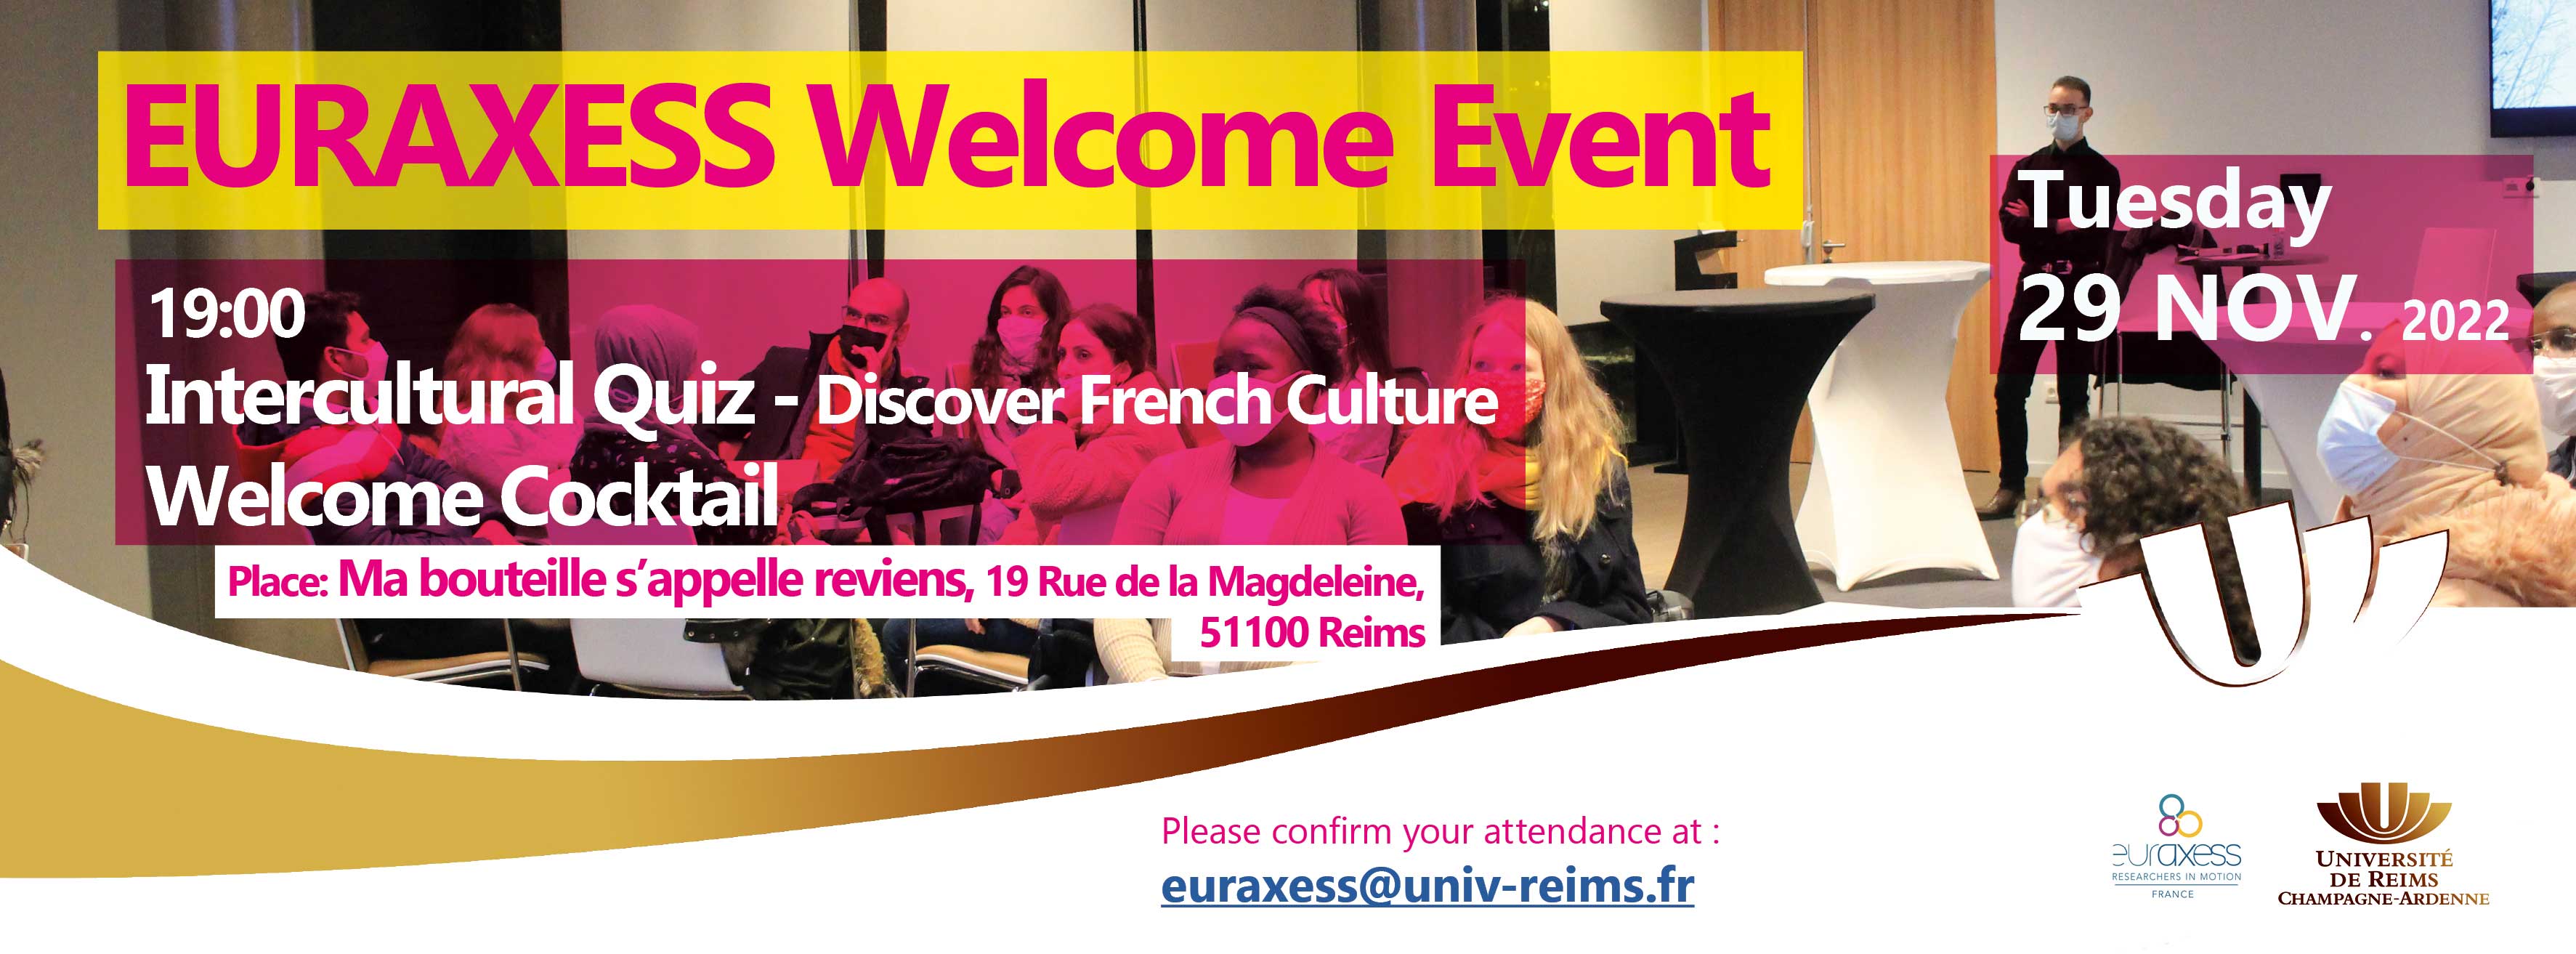 Euraxess welcome event